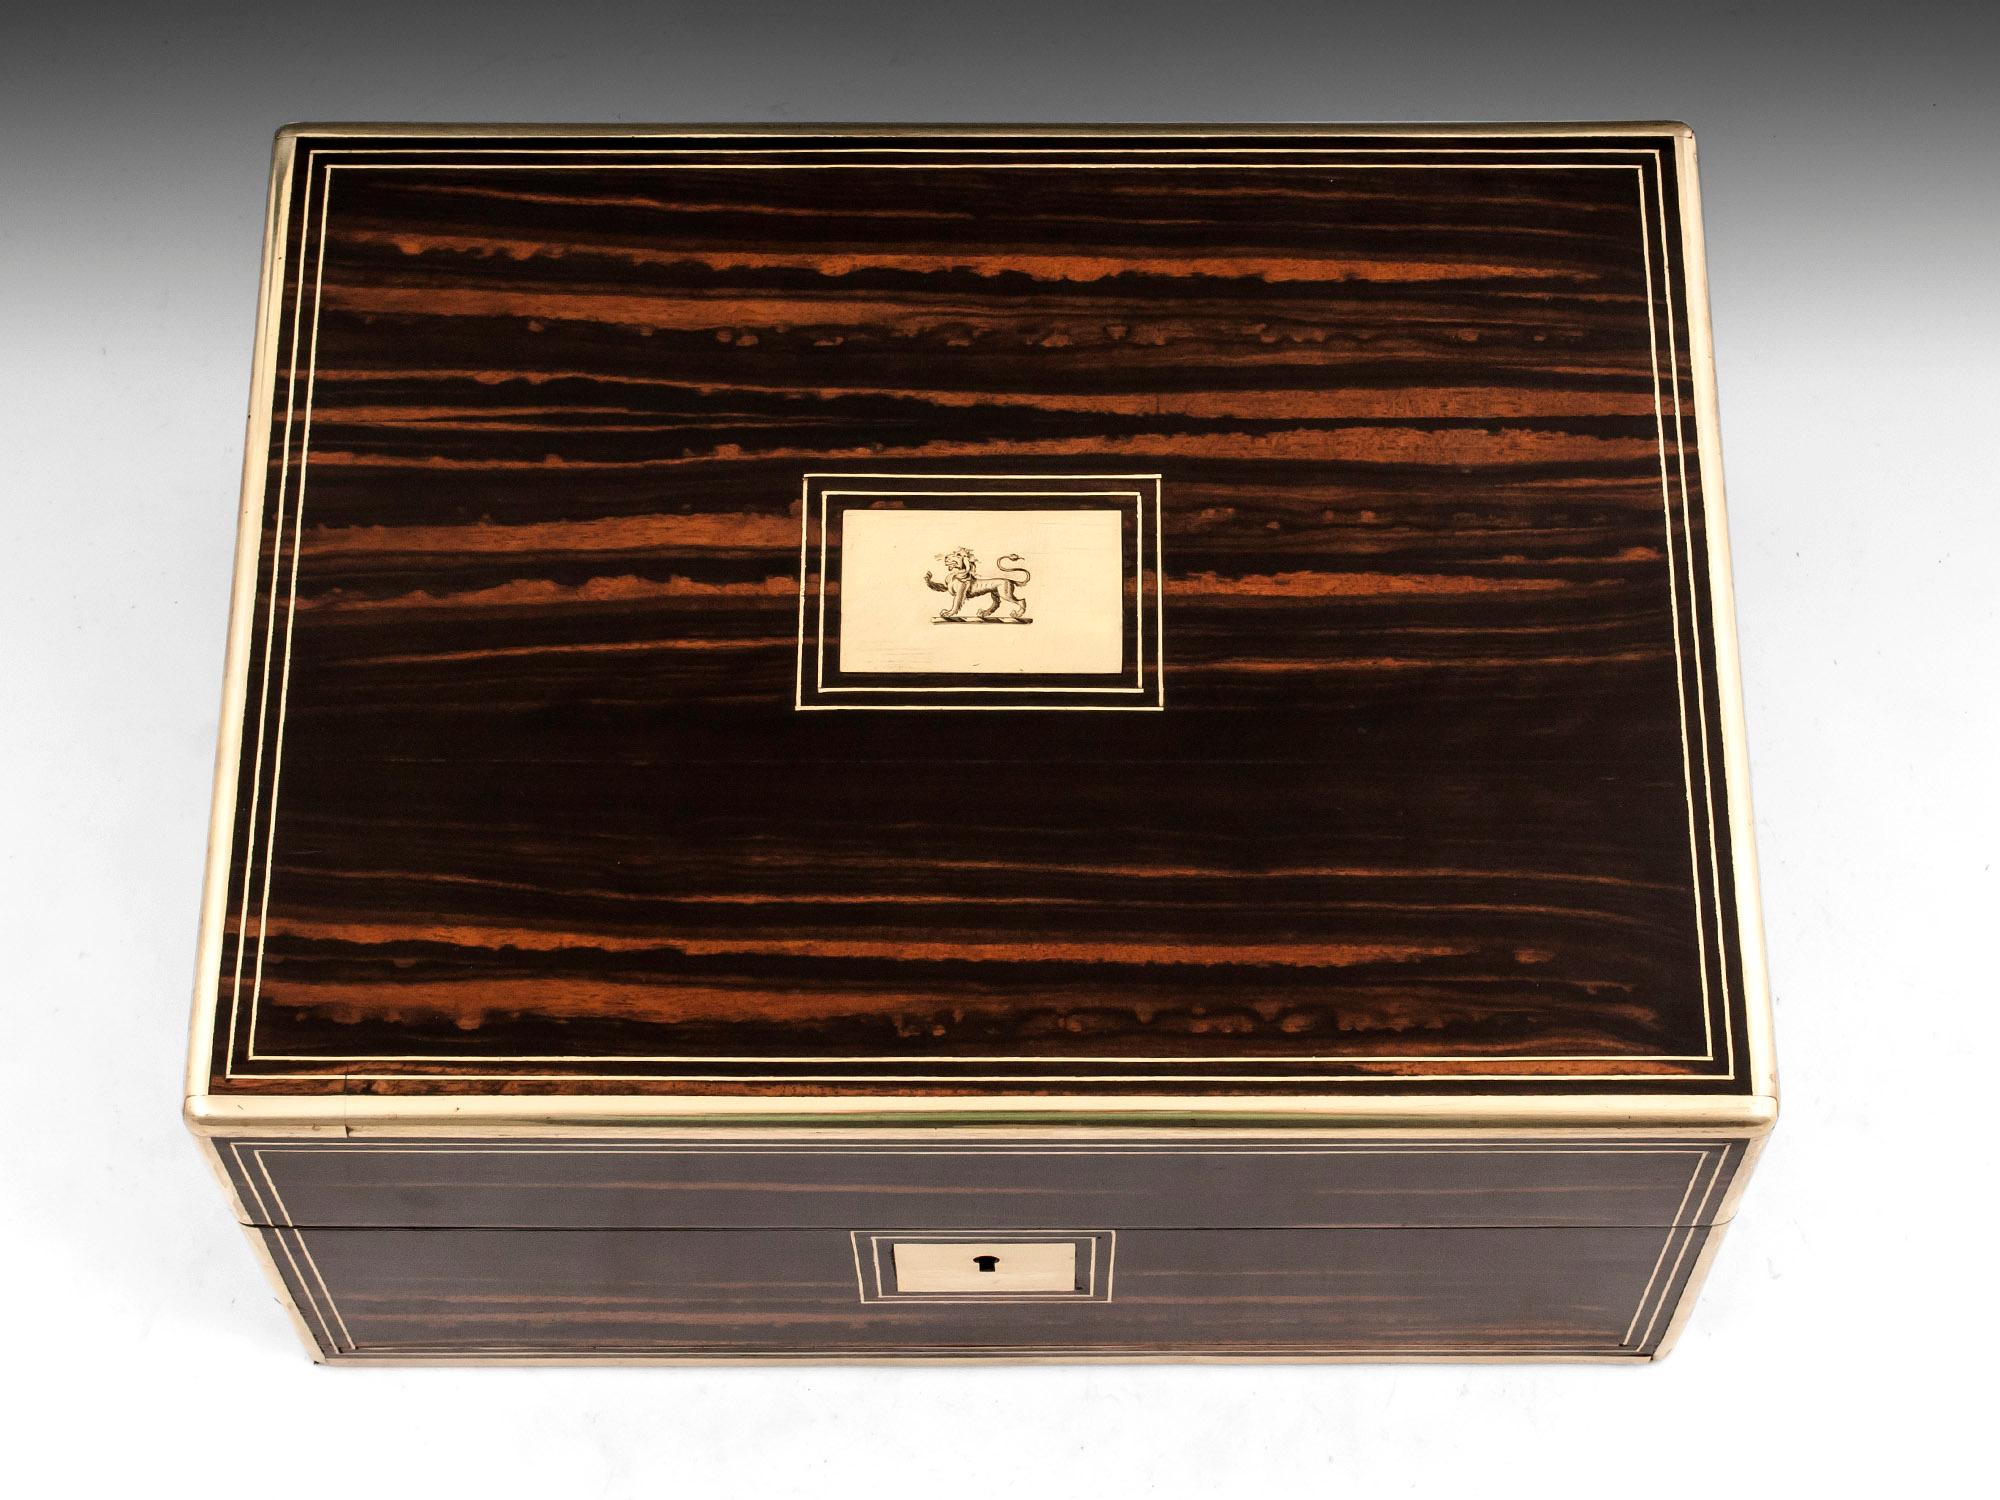 British Antique Coromandel and Brass Velvet Lined Jewelry Box 19th Century